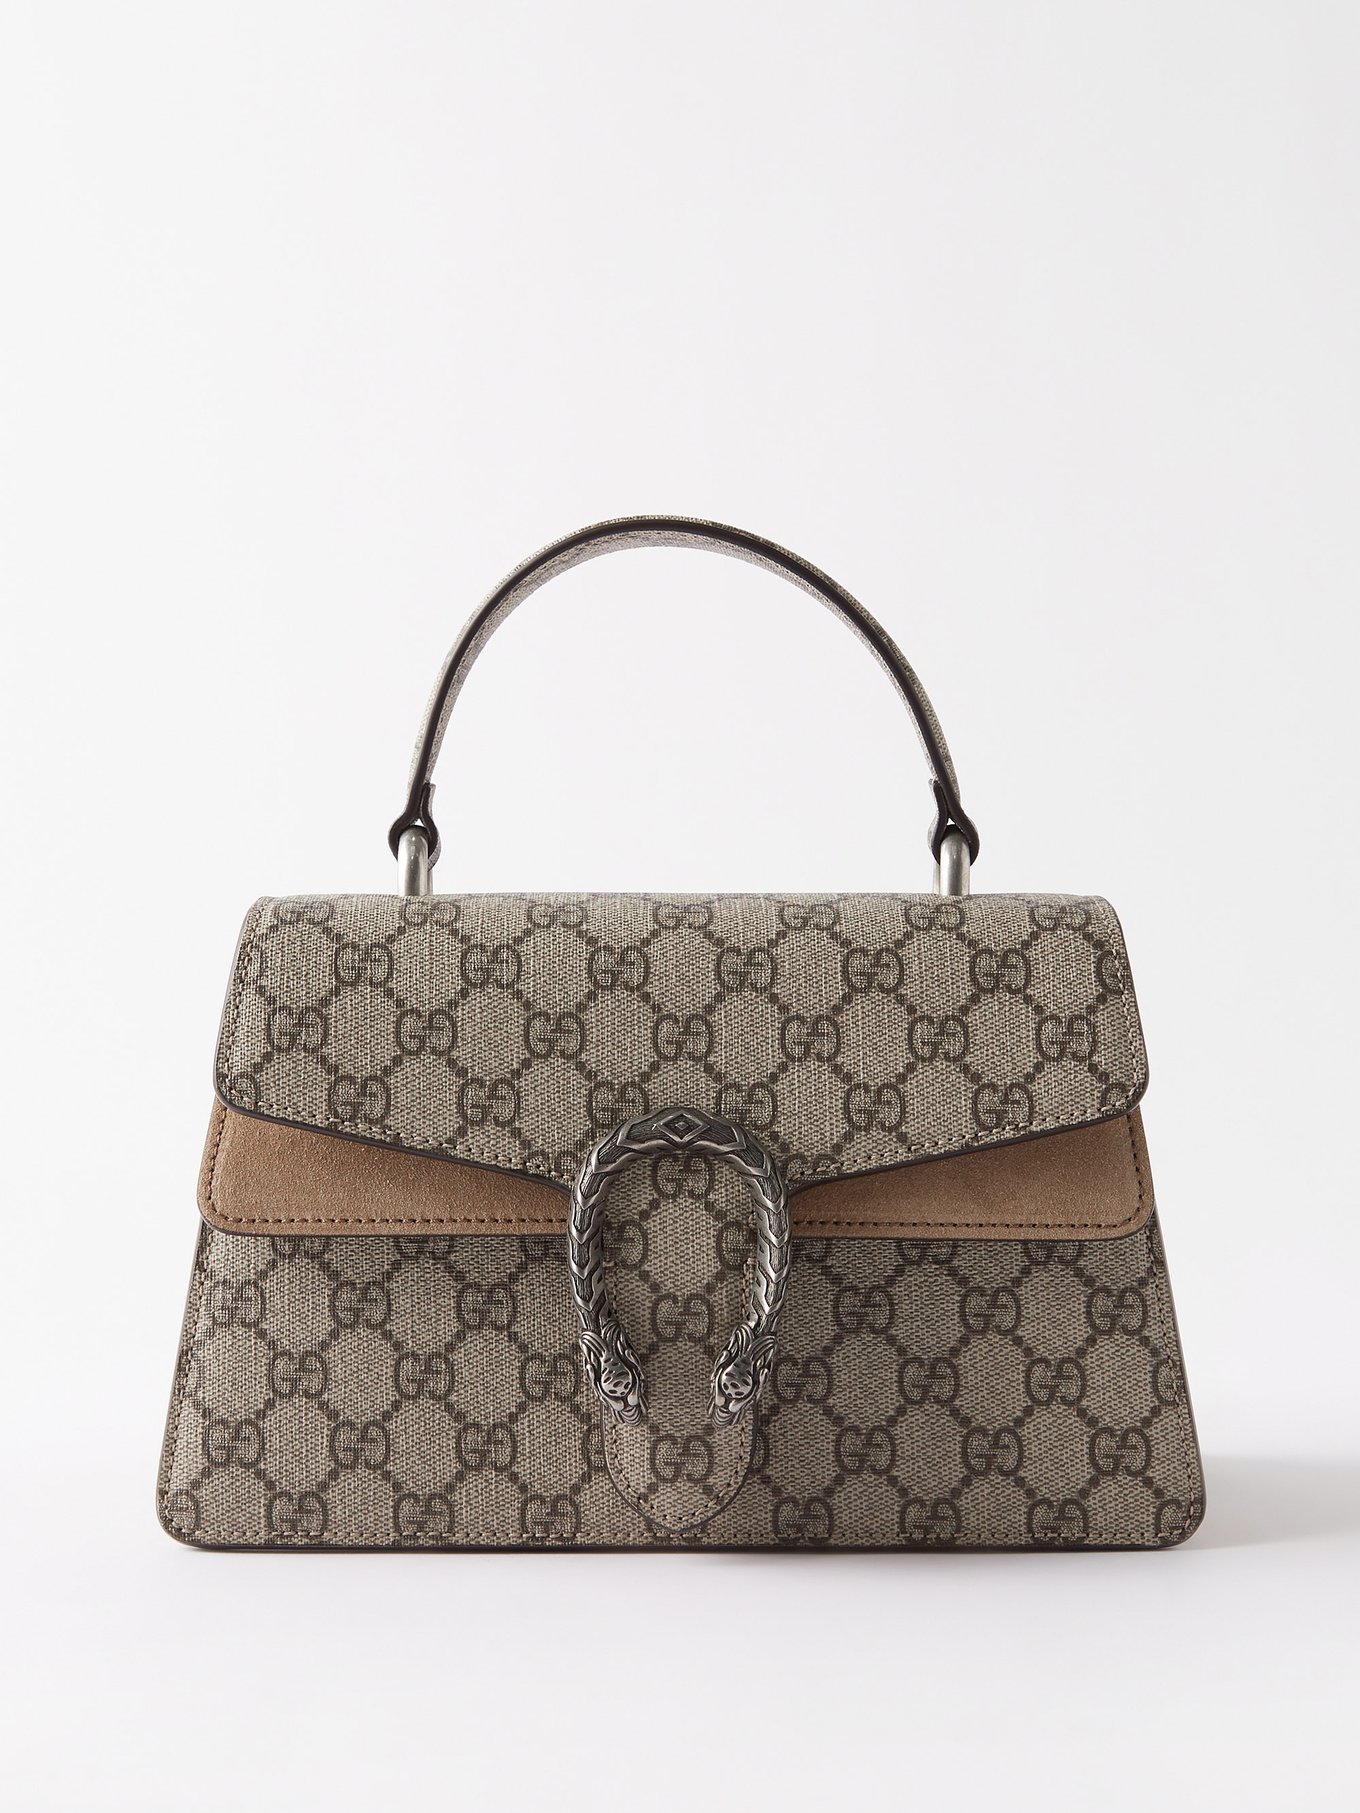 Look For Less: Gucci Dionysus Bag